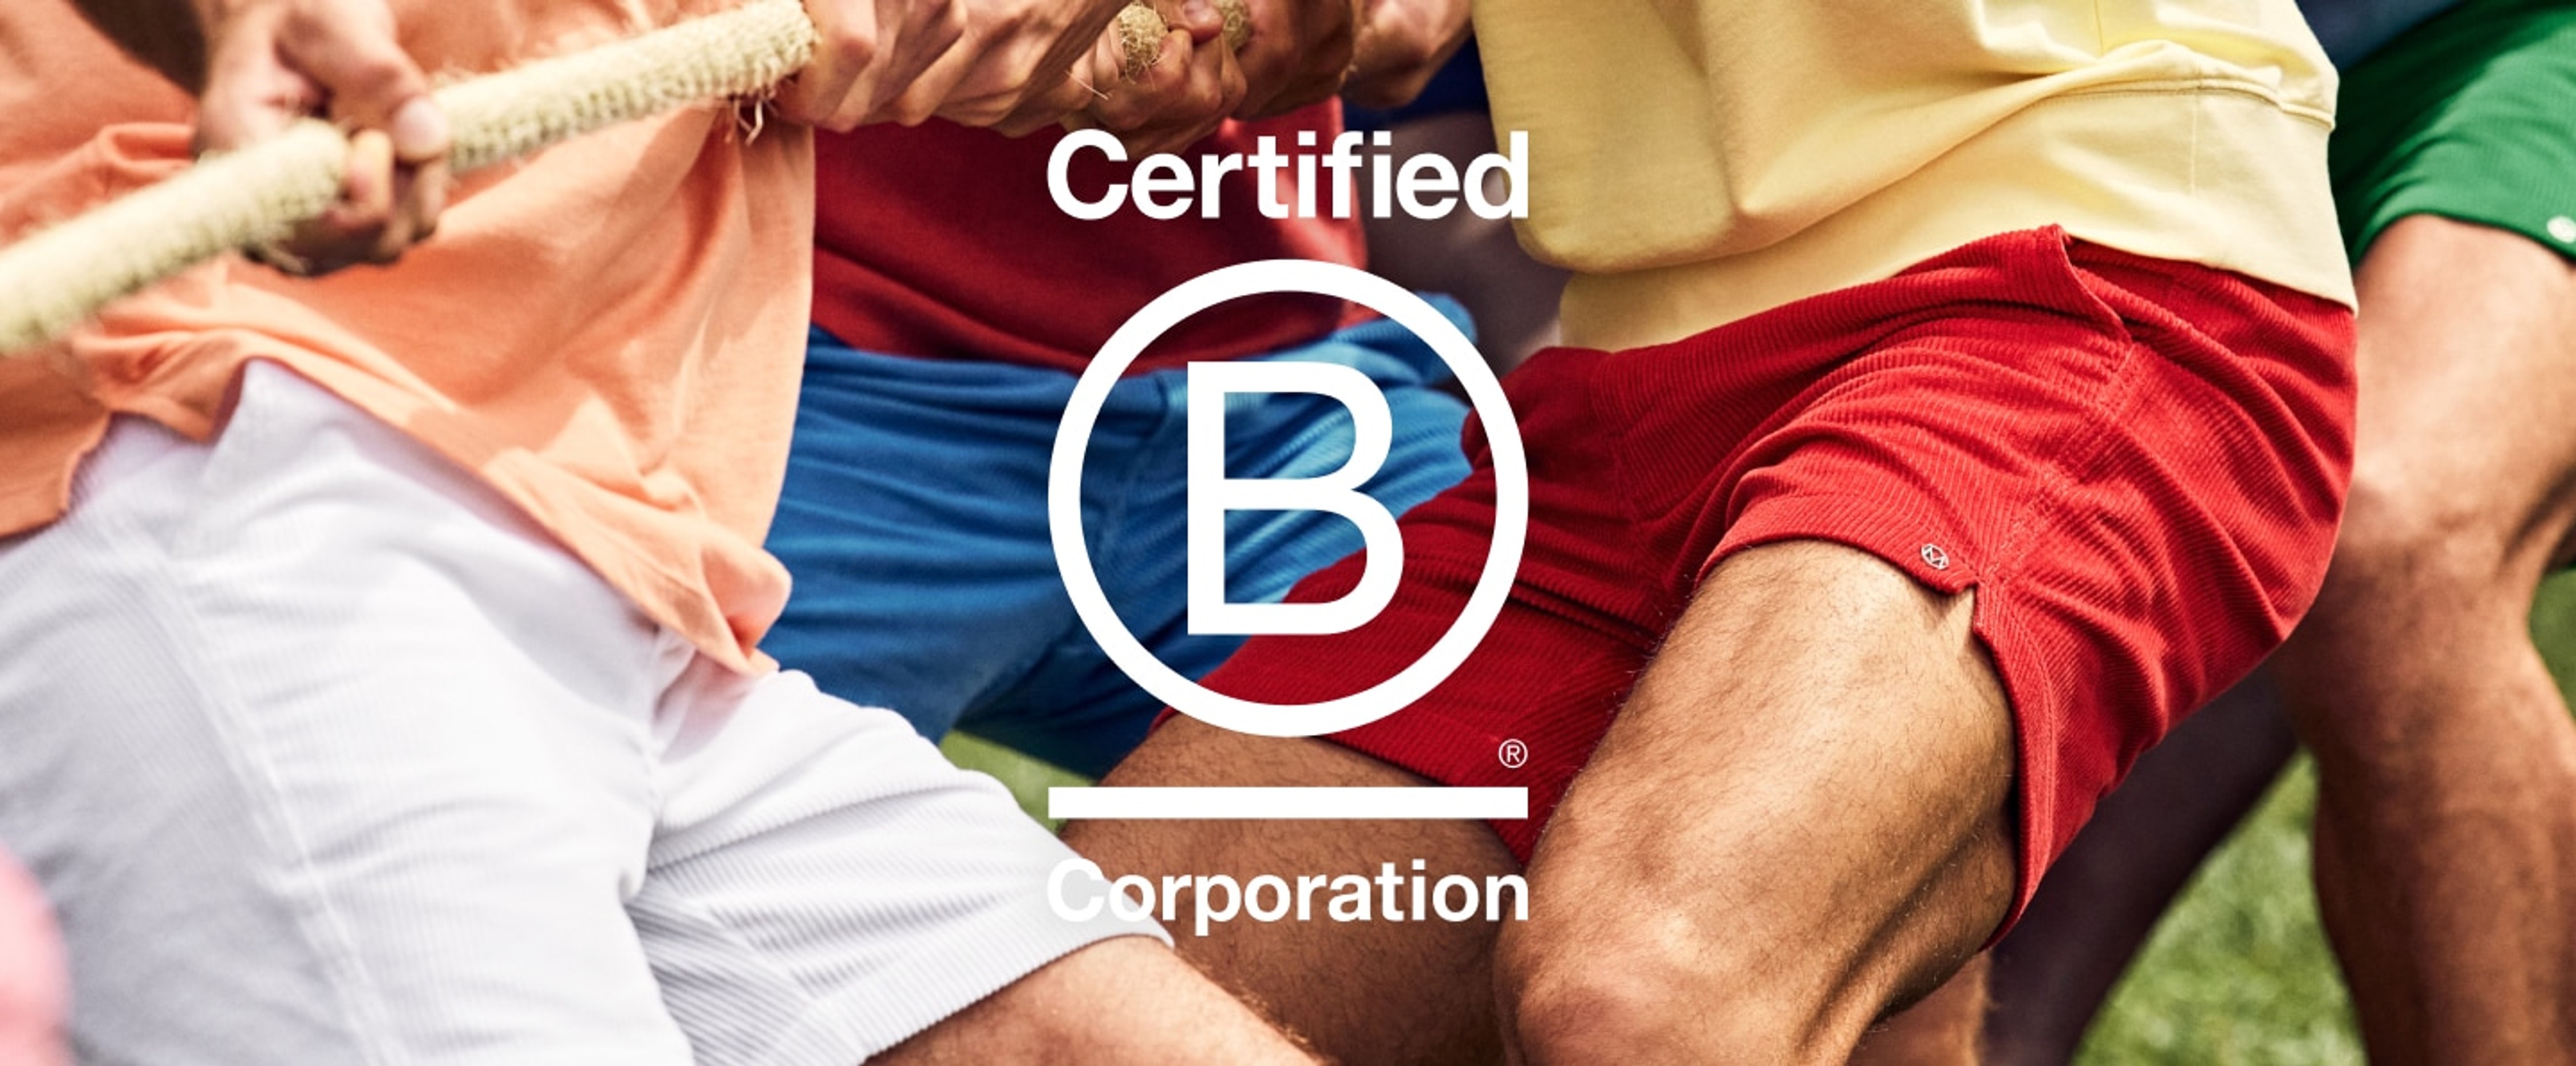 b corporation logo